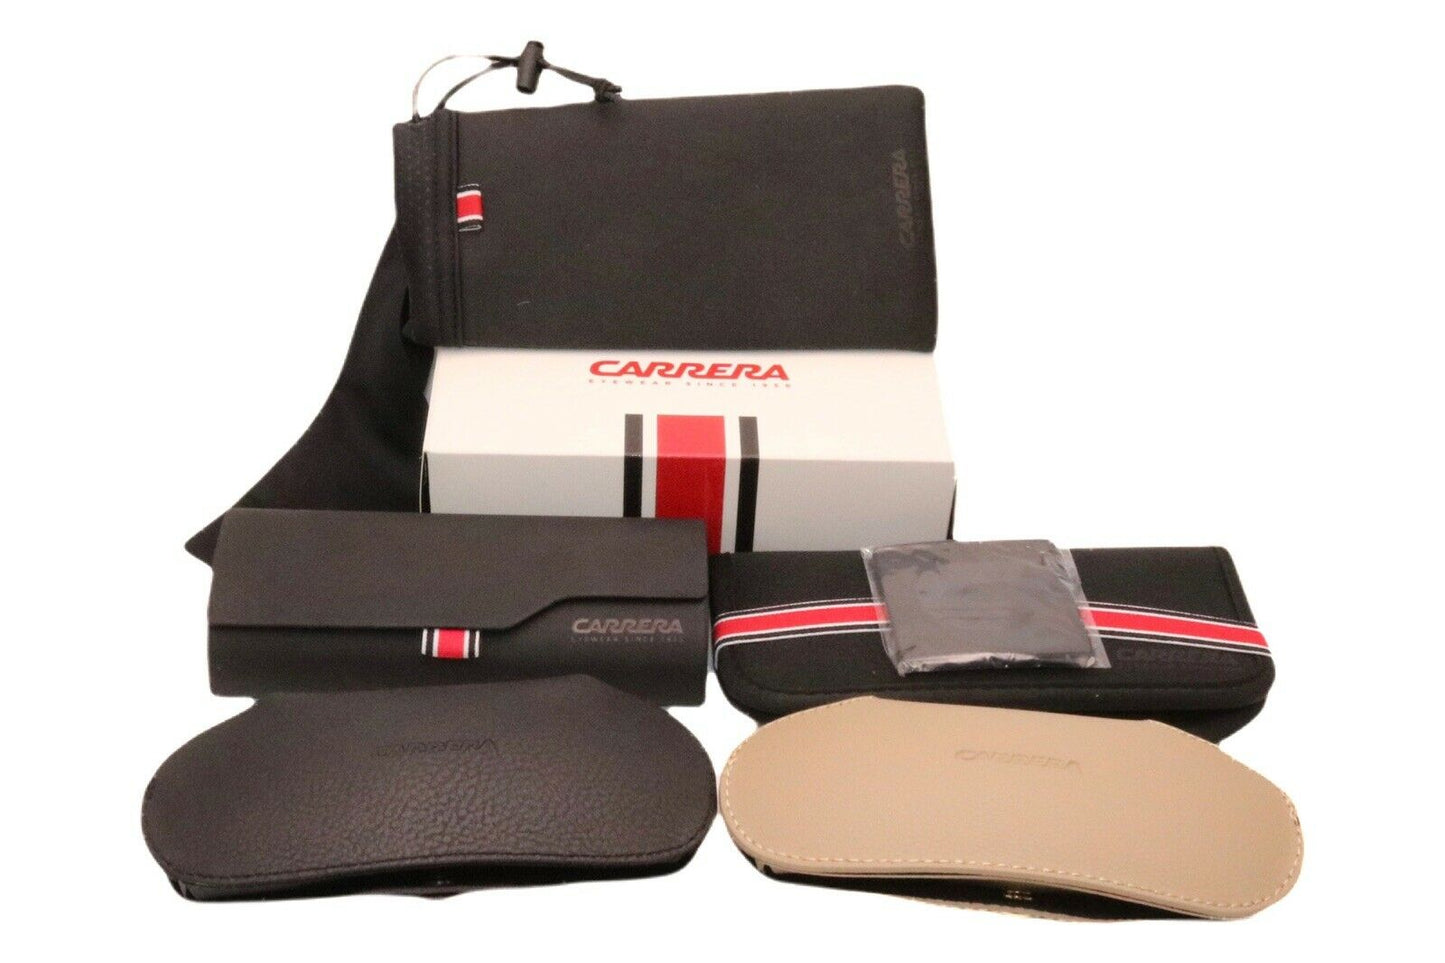 Carrera 276/S-0003 UC 55mm New Sunglasses